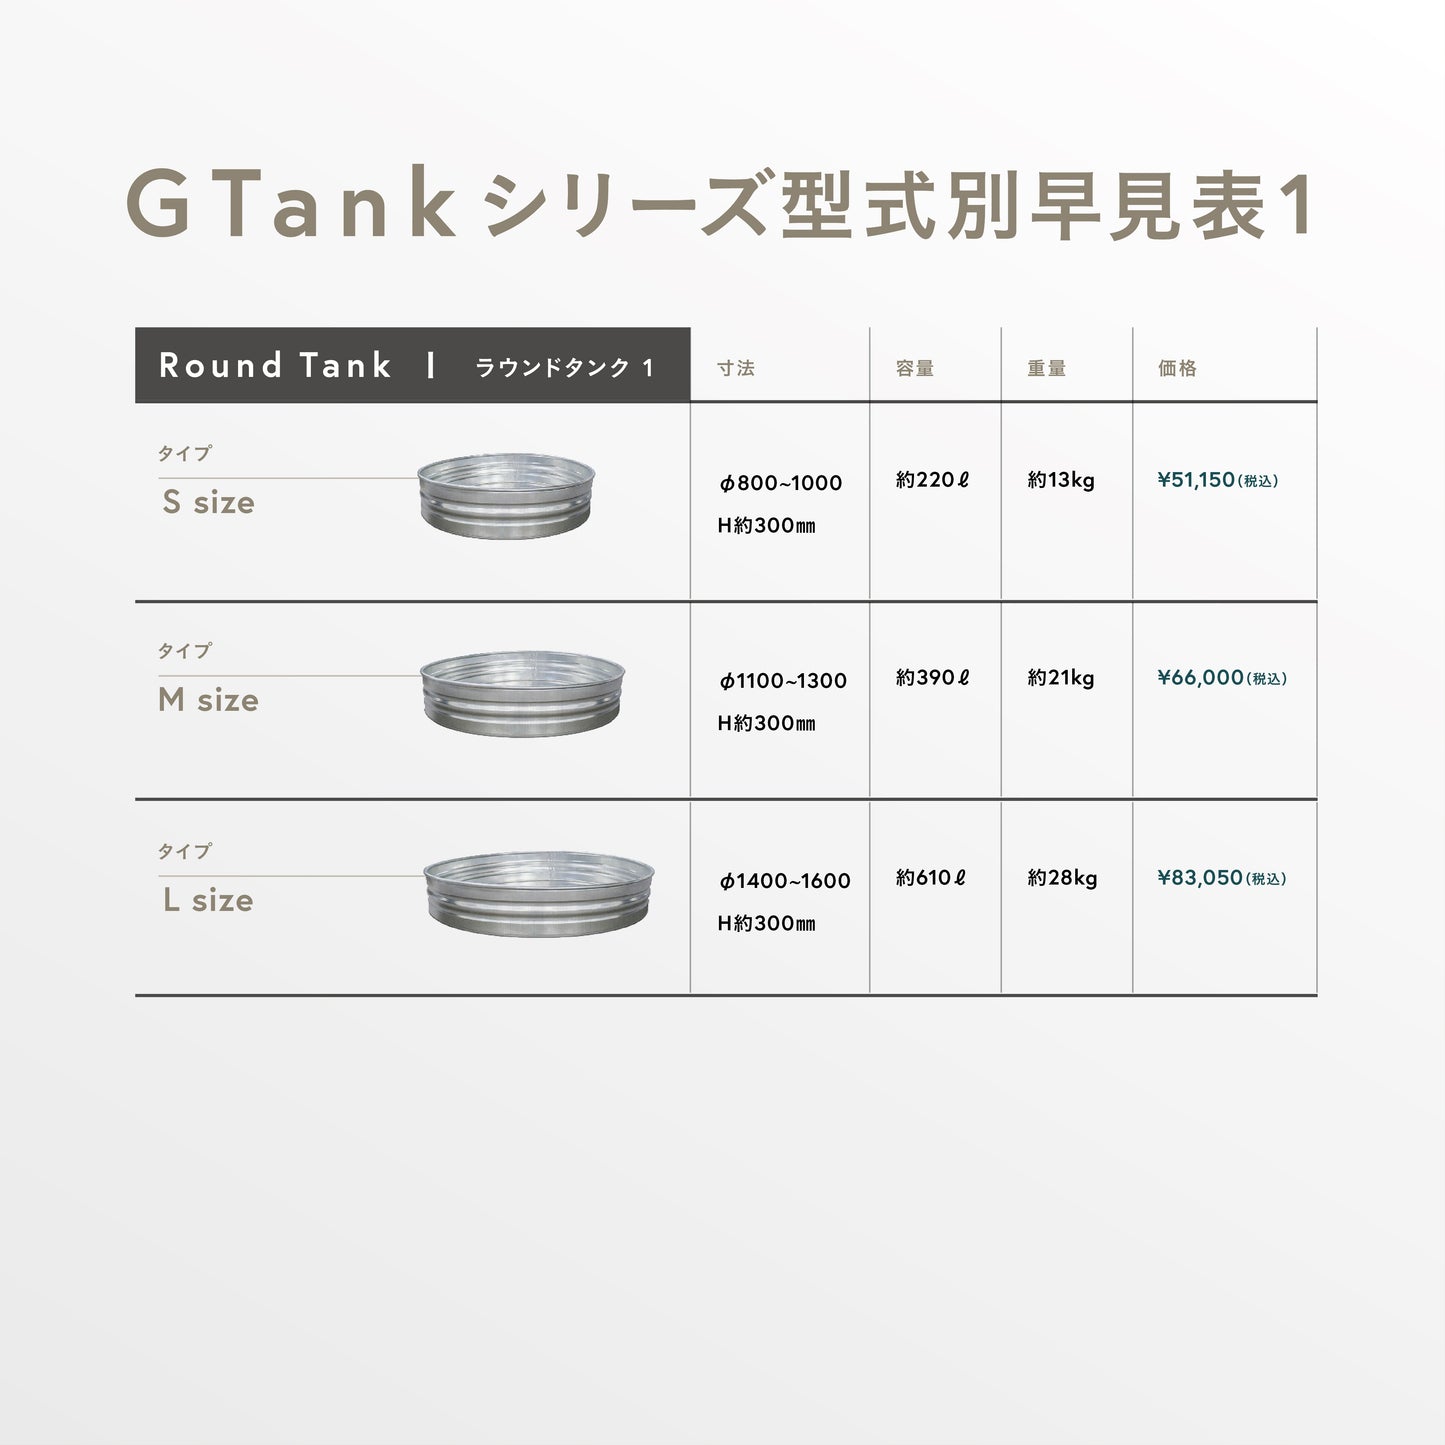 Gタンク／ラウンドタンク Ⅱ　L size